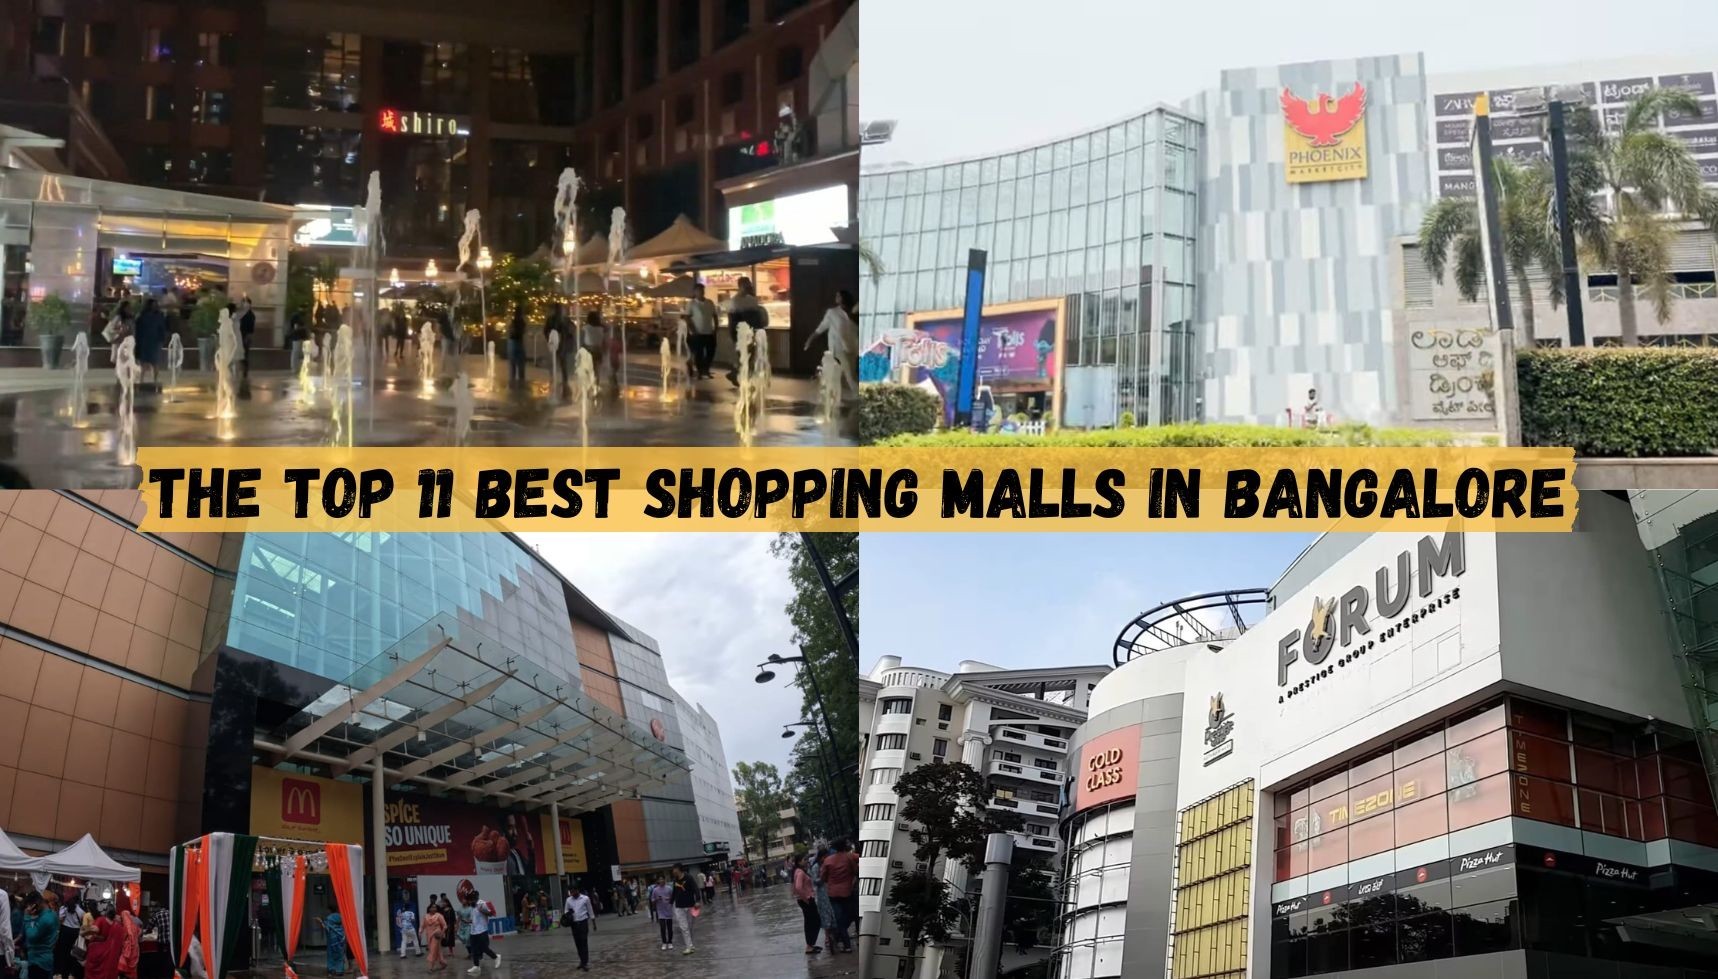 Retail Heaven: Bangalore's Top 11 Shopping Malls